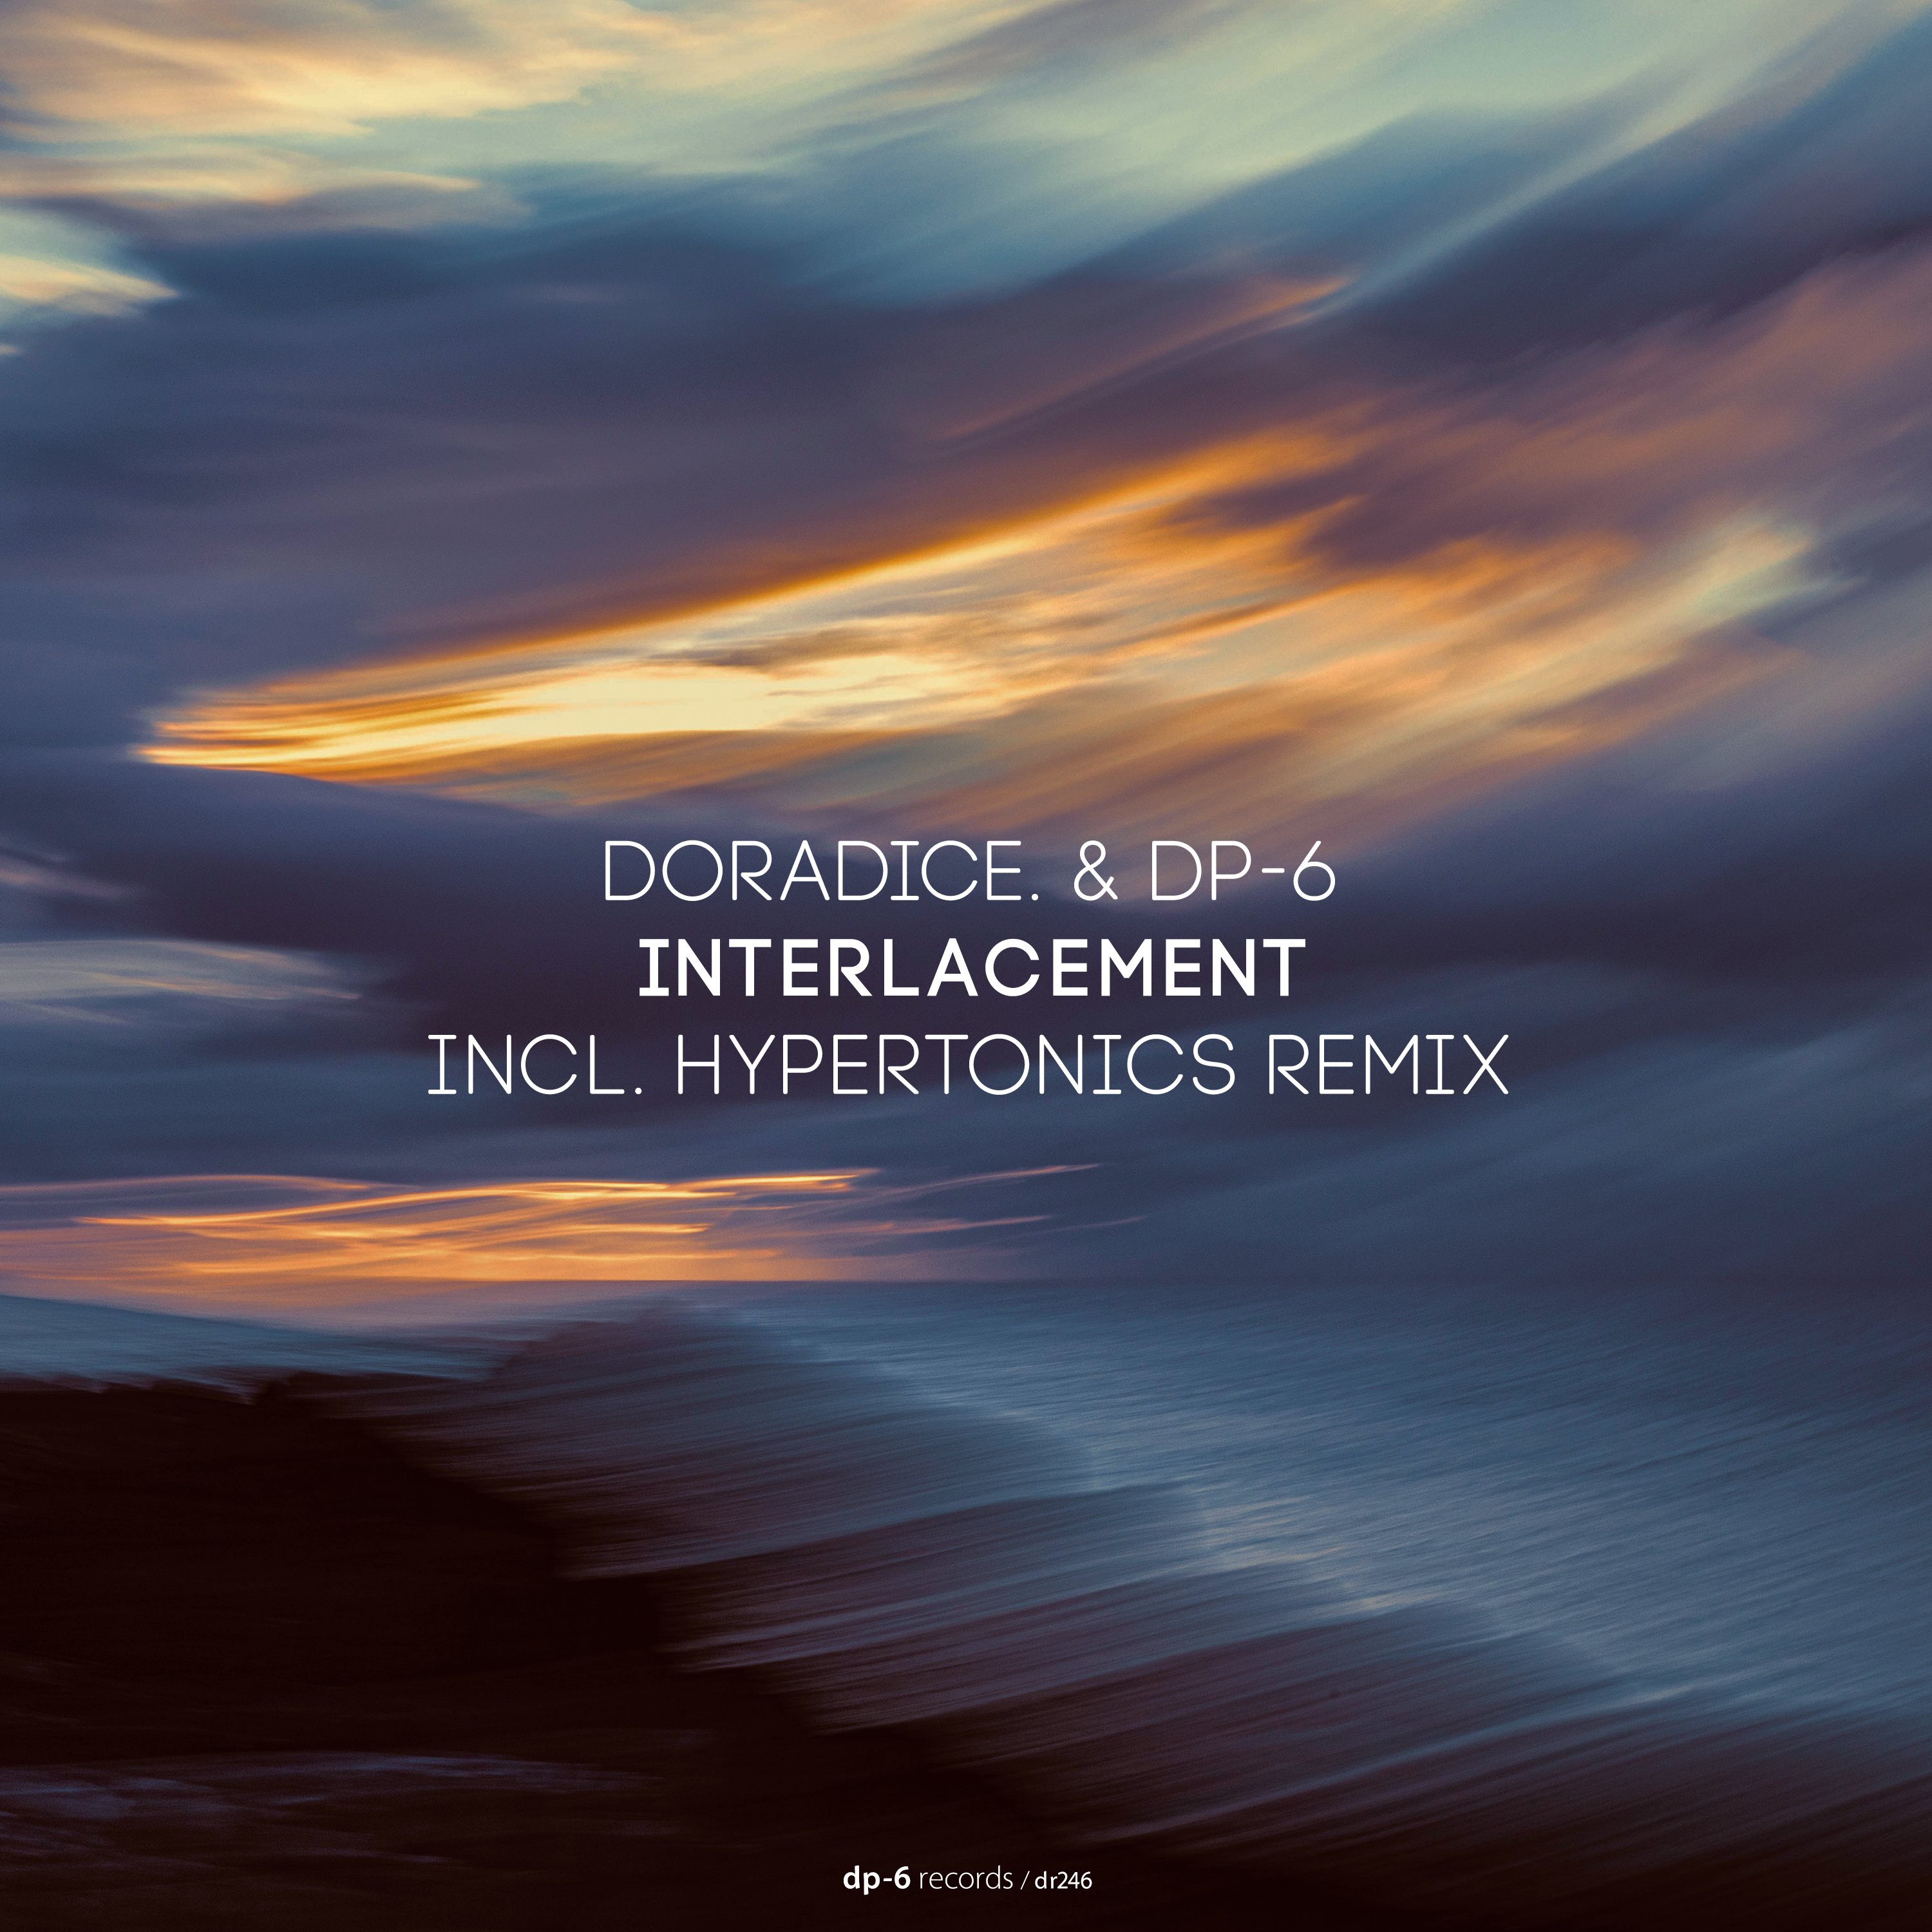 doradice., DP-6: Interlacement incl. Hypertonics remix